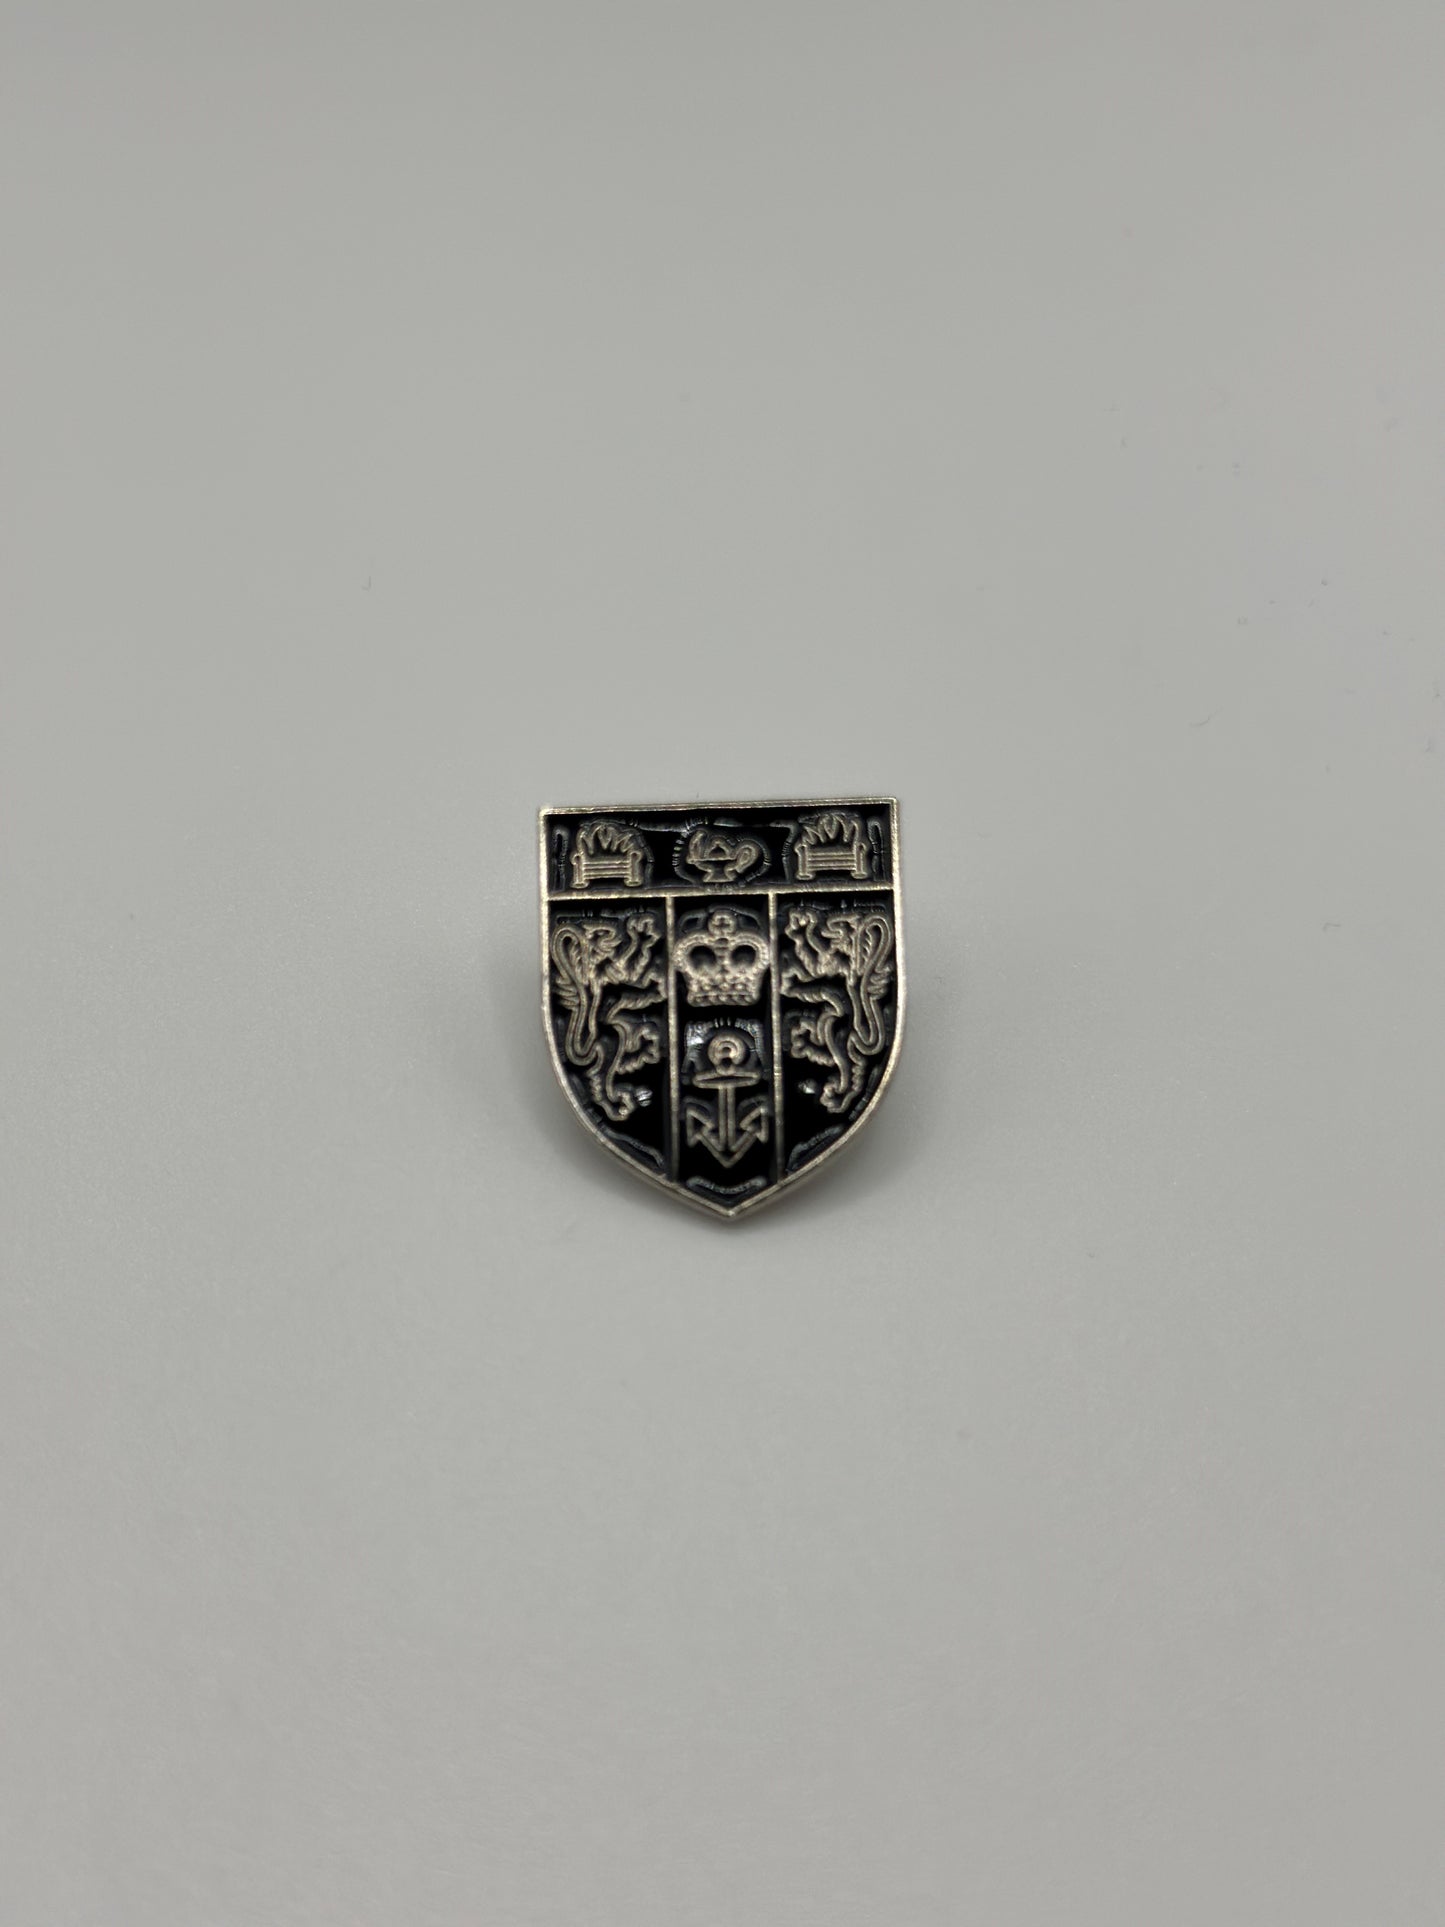 King's College London Shield Pin